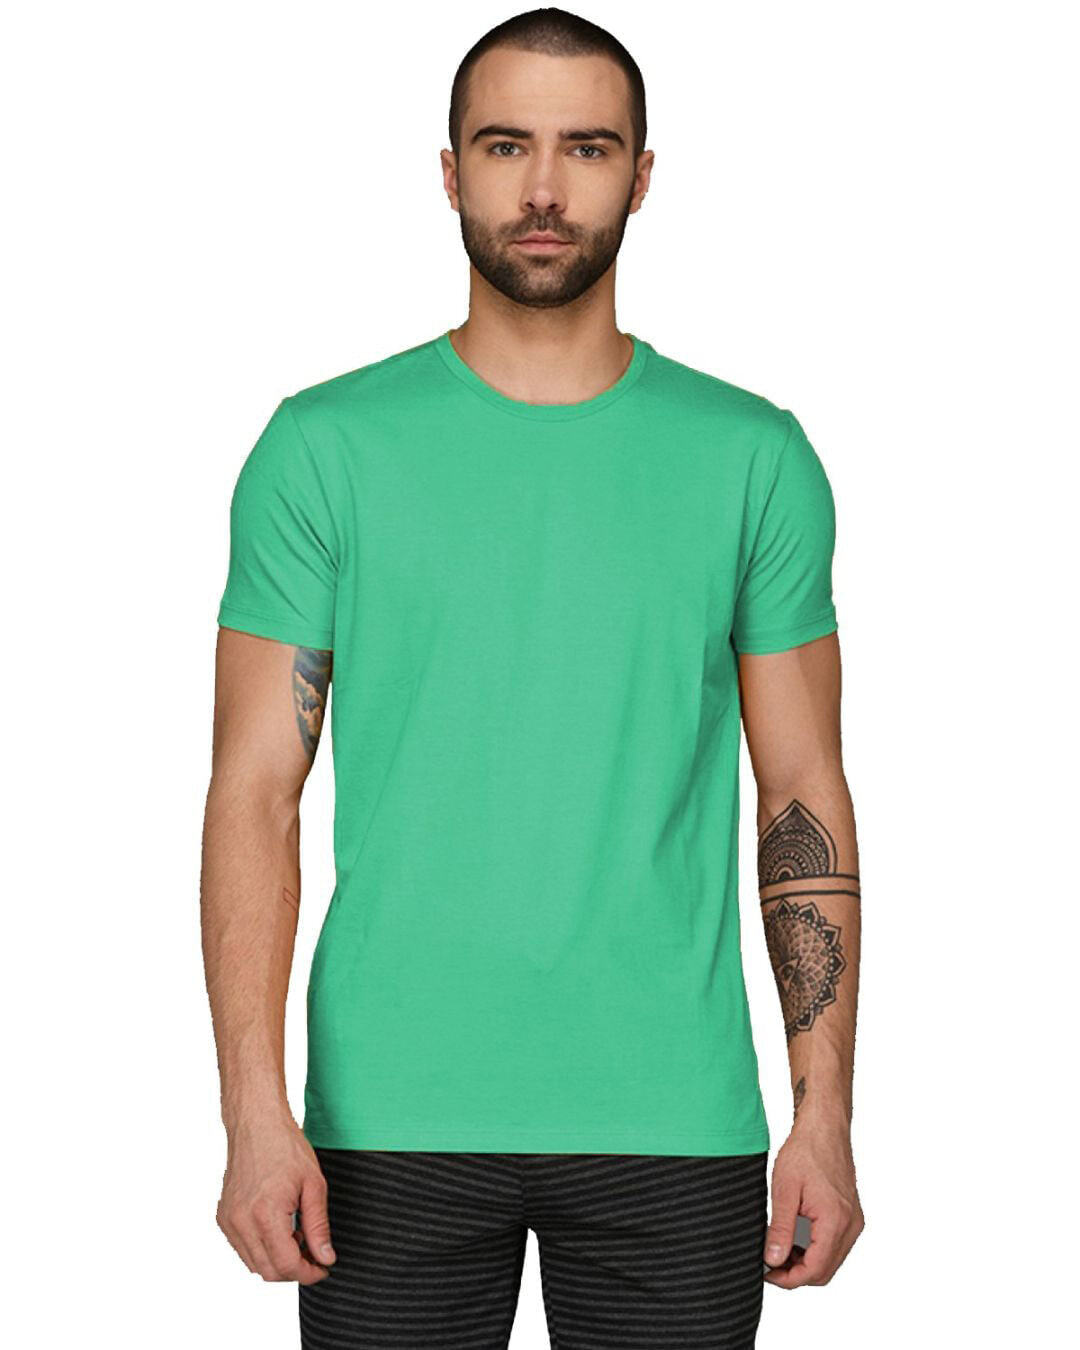 Buy Men's Cotton Plain T-shirt Online at Bewakoof